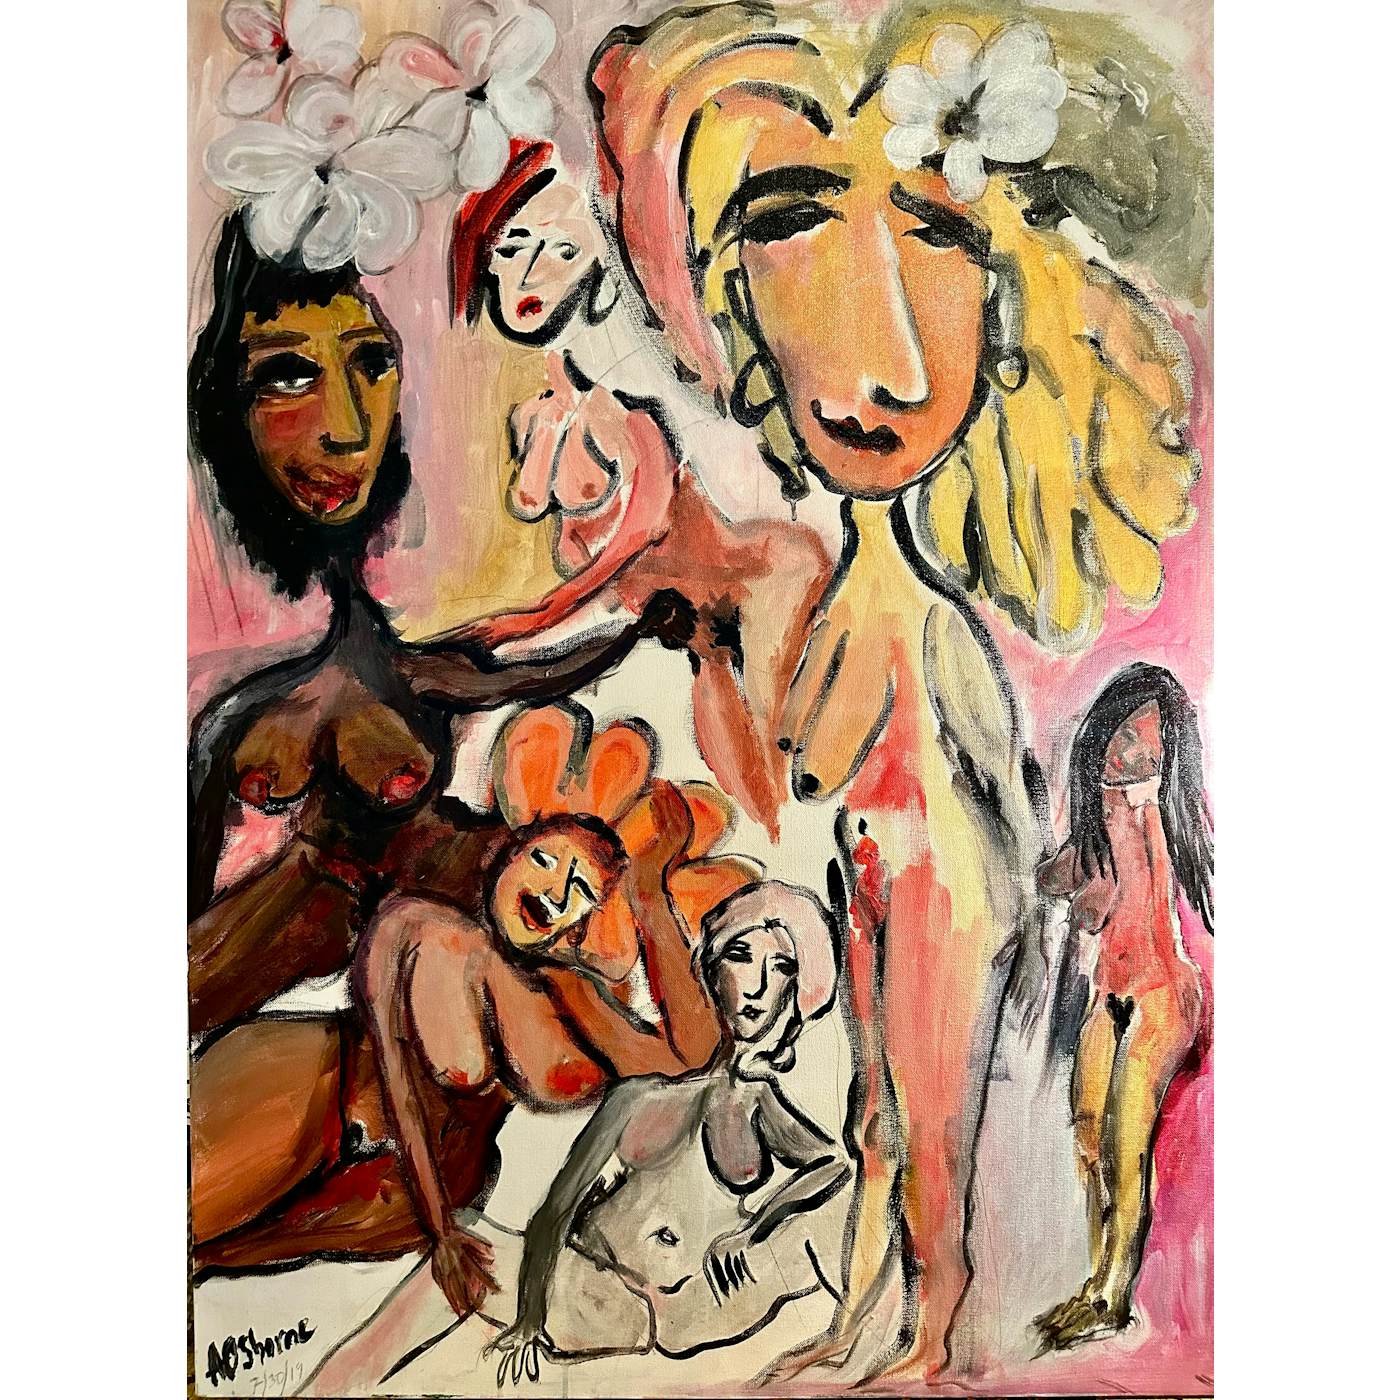 Anders Osborne "Pink Dream" - Acryllic on Canvas